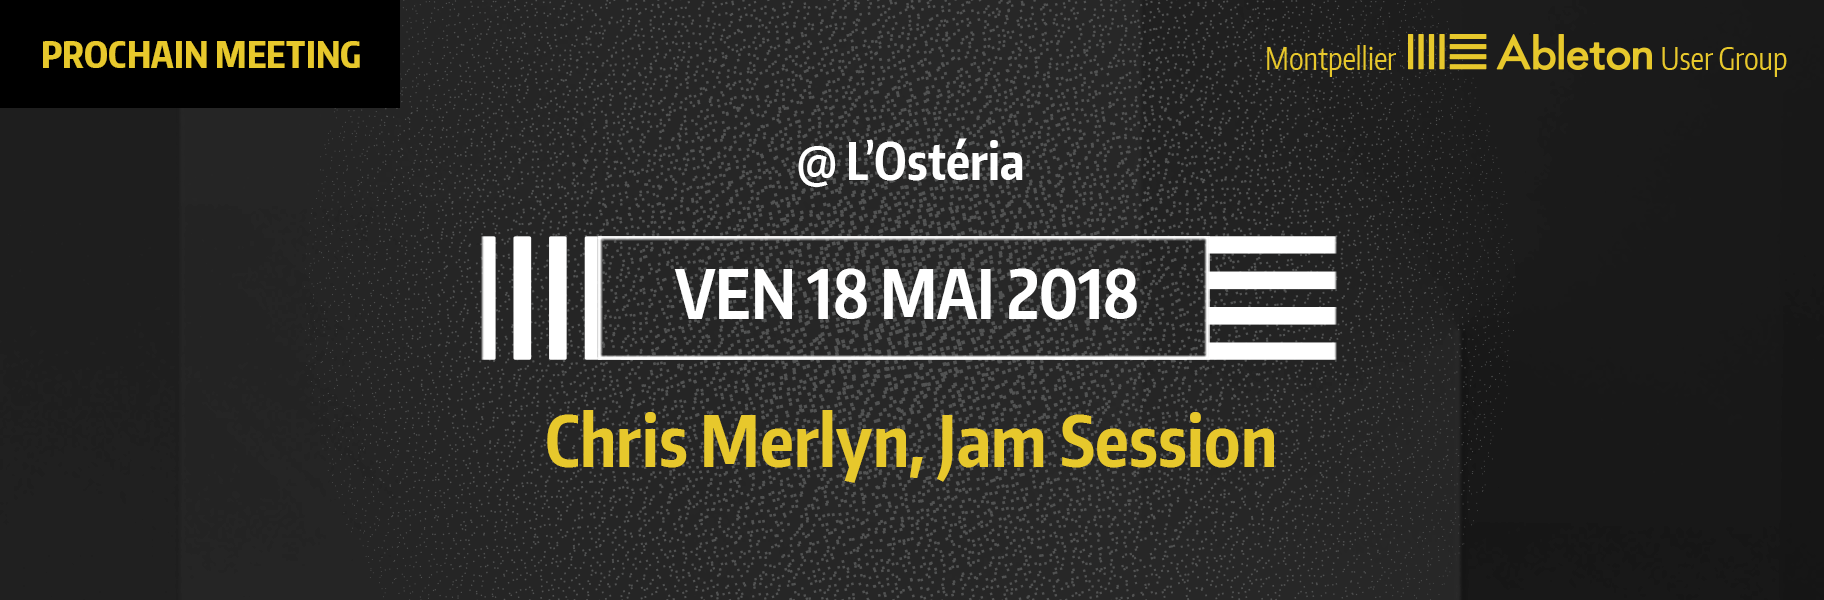 MAUG du 18 Mai 2018 - Chris Merlyn, Jam Session